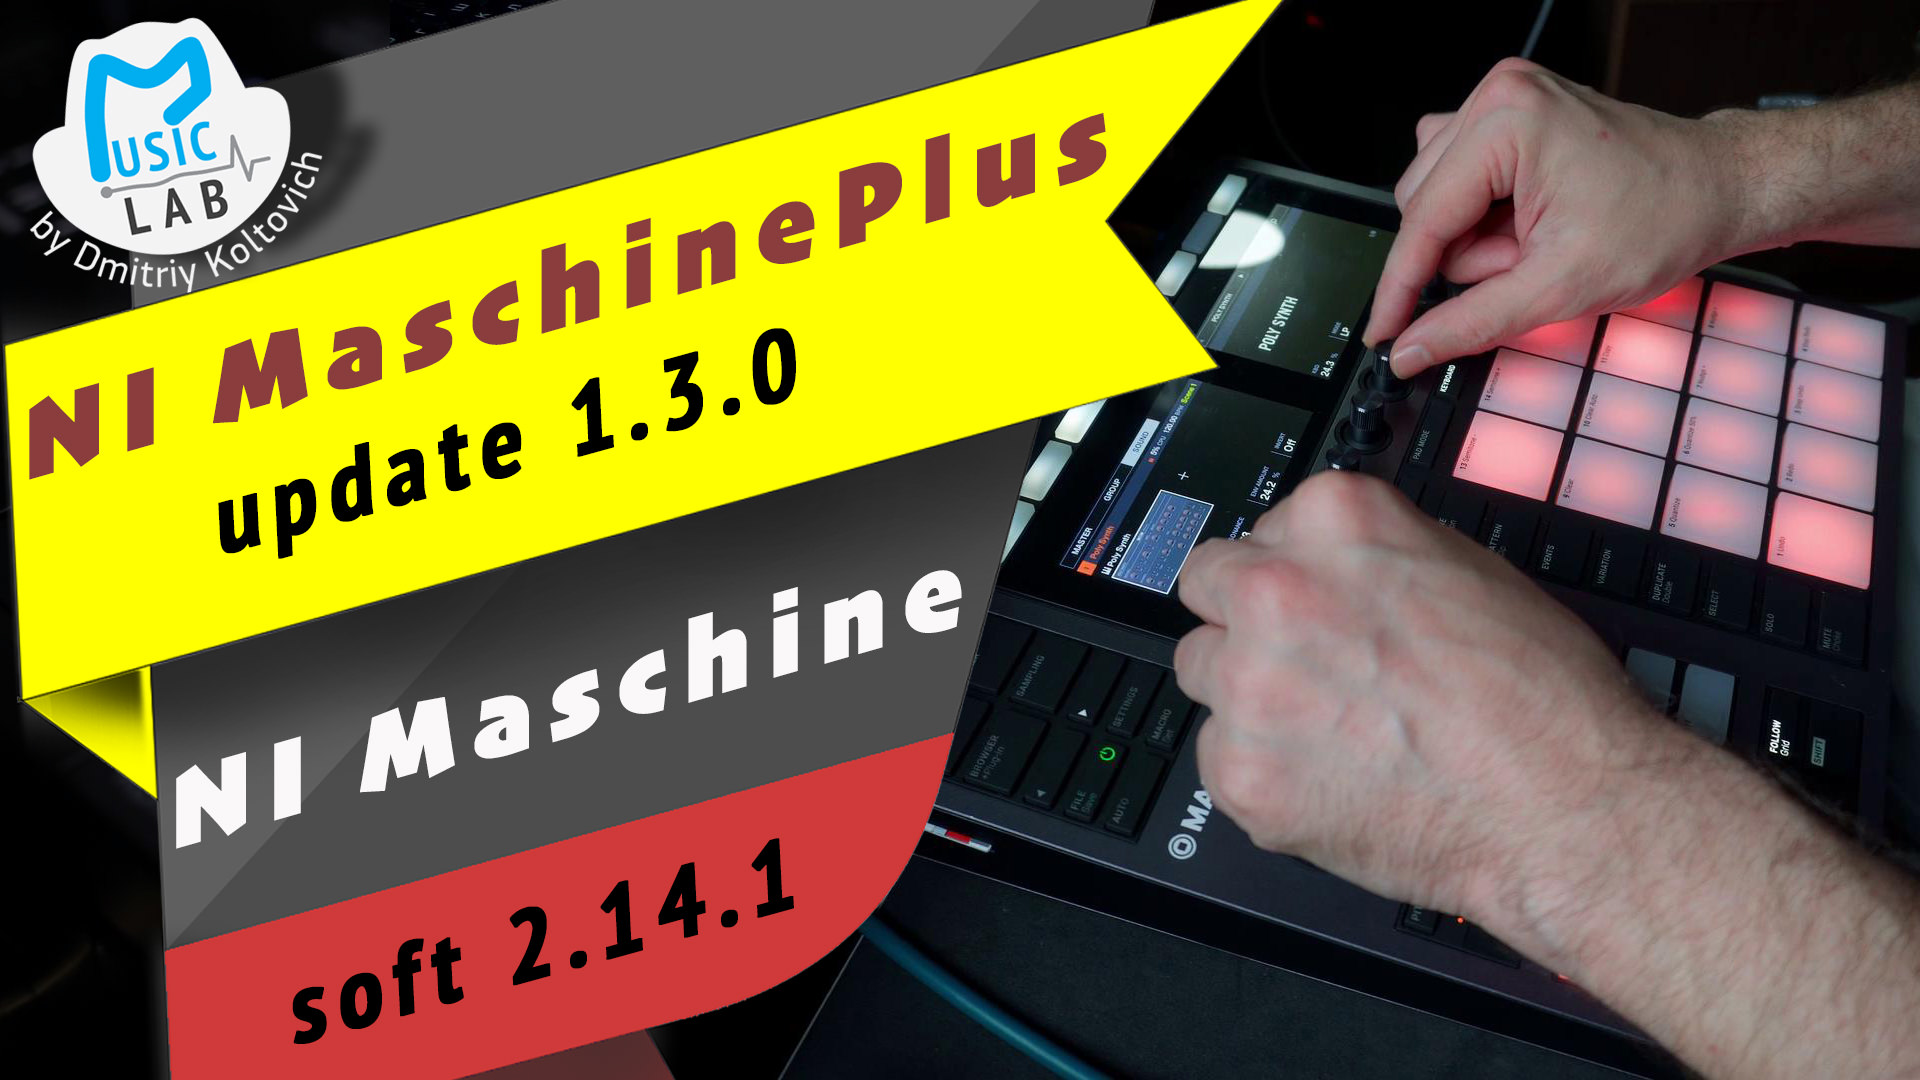 Обзор прошивки MaschinePlus 1.3.0 и обновление софта Maschine 2.14.1